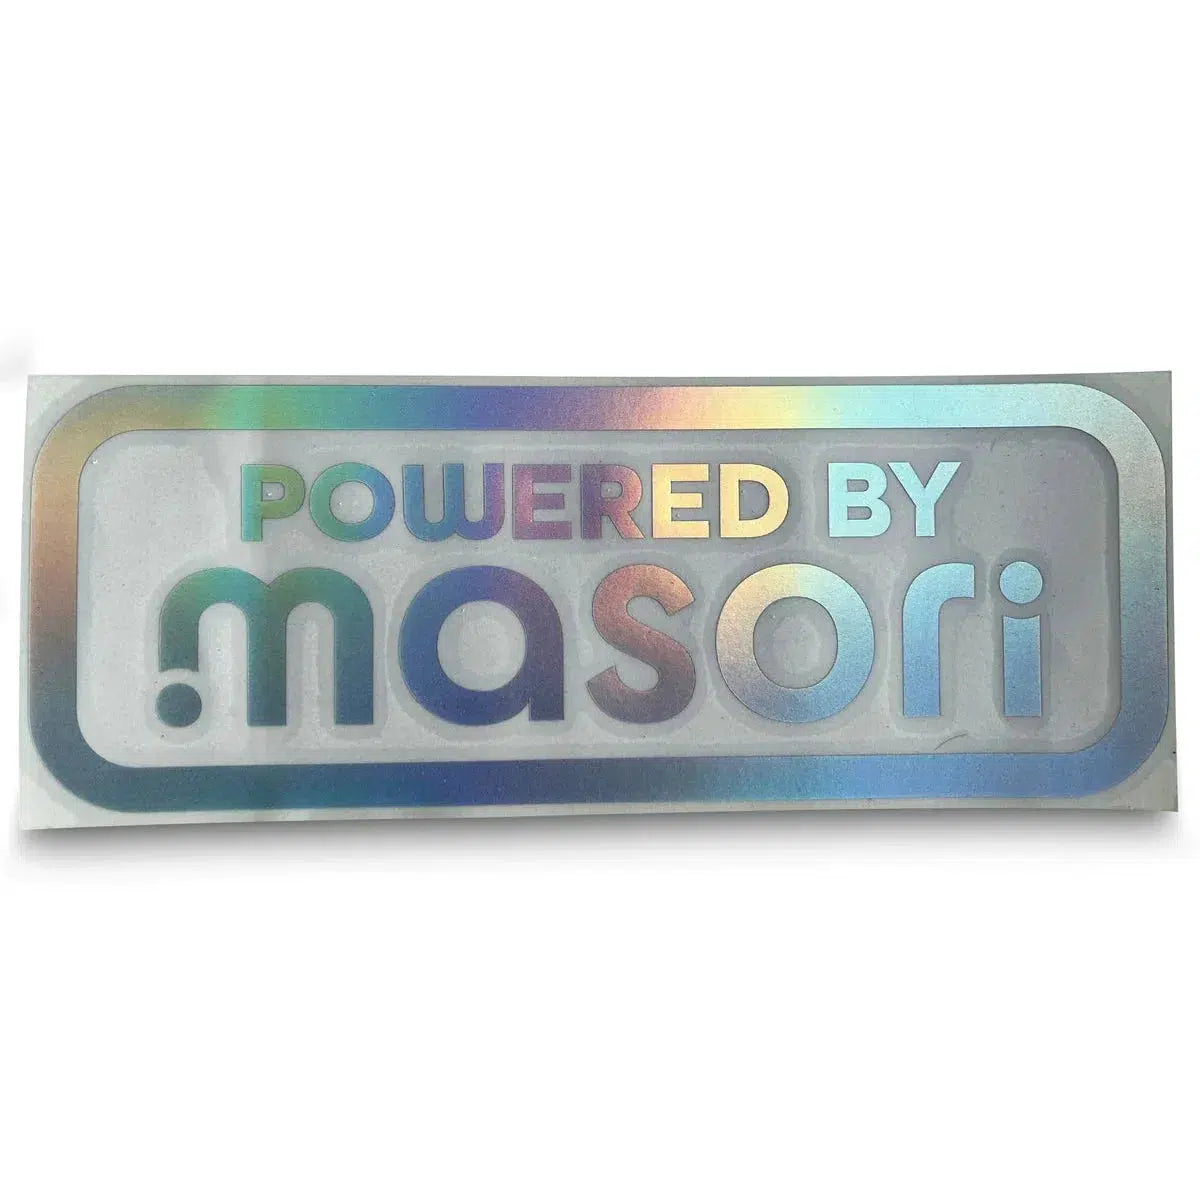 Masori-POWERED BY MASORI Hologram Sticker-Sticker-Masori.de